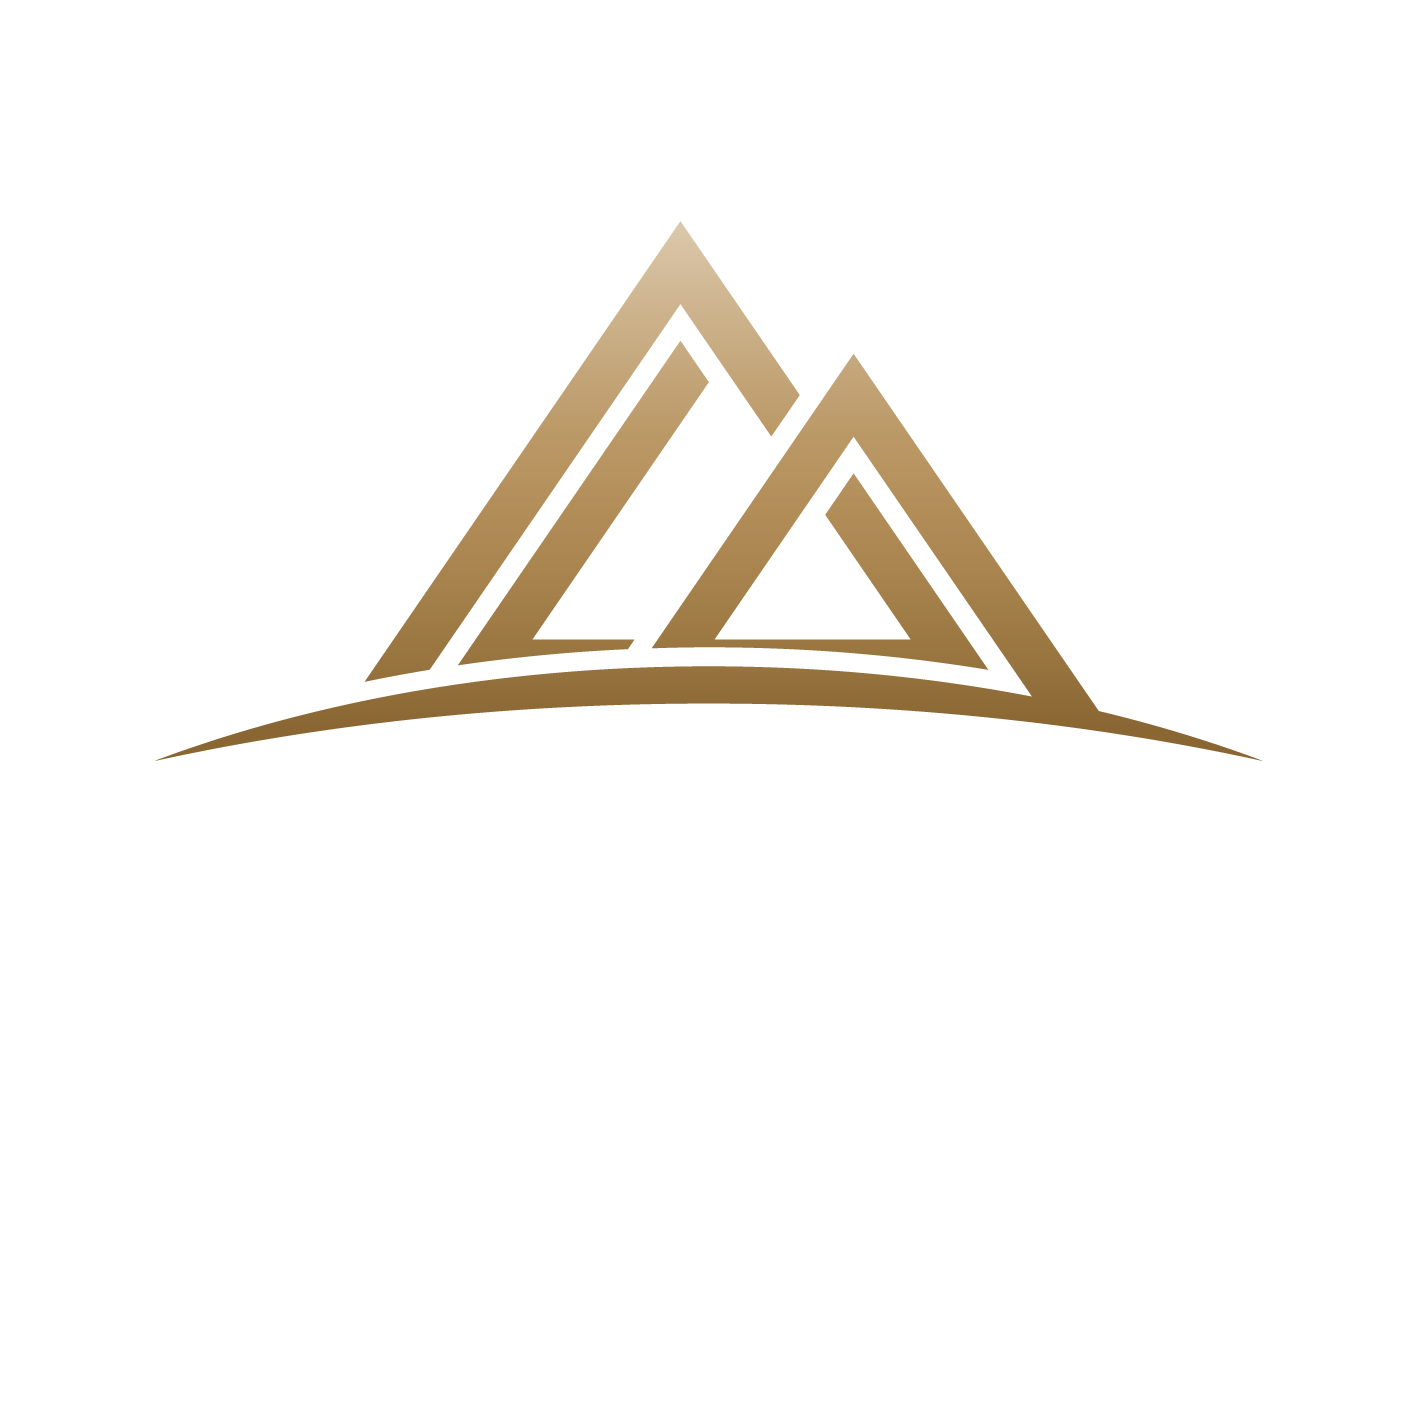 Golf in Radium, BC at the Radium Course or Springs Courses